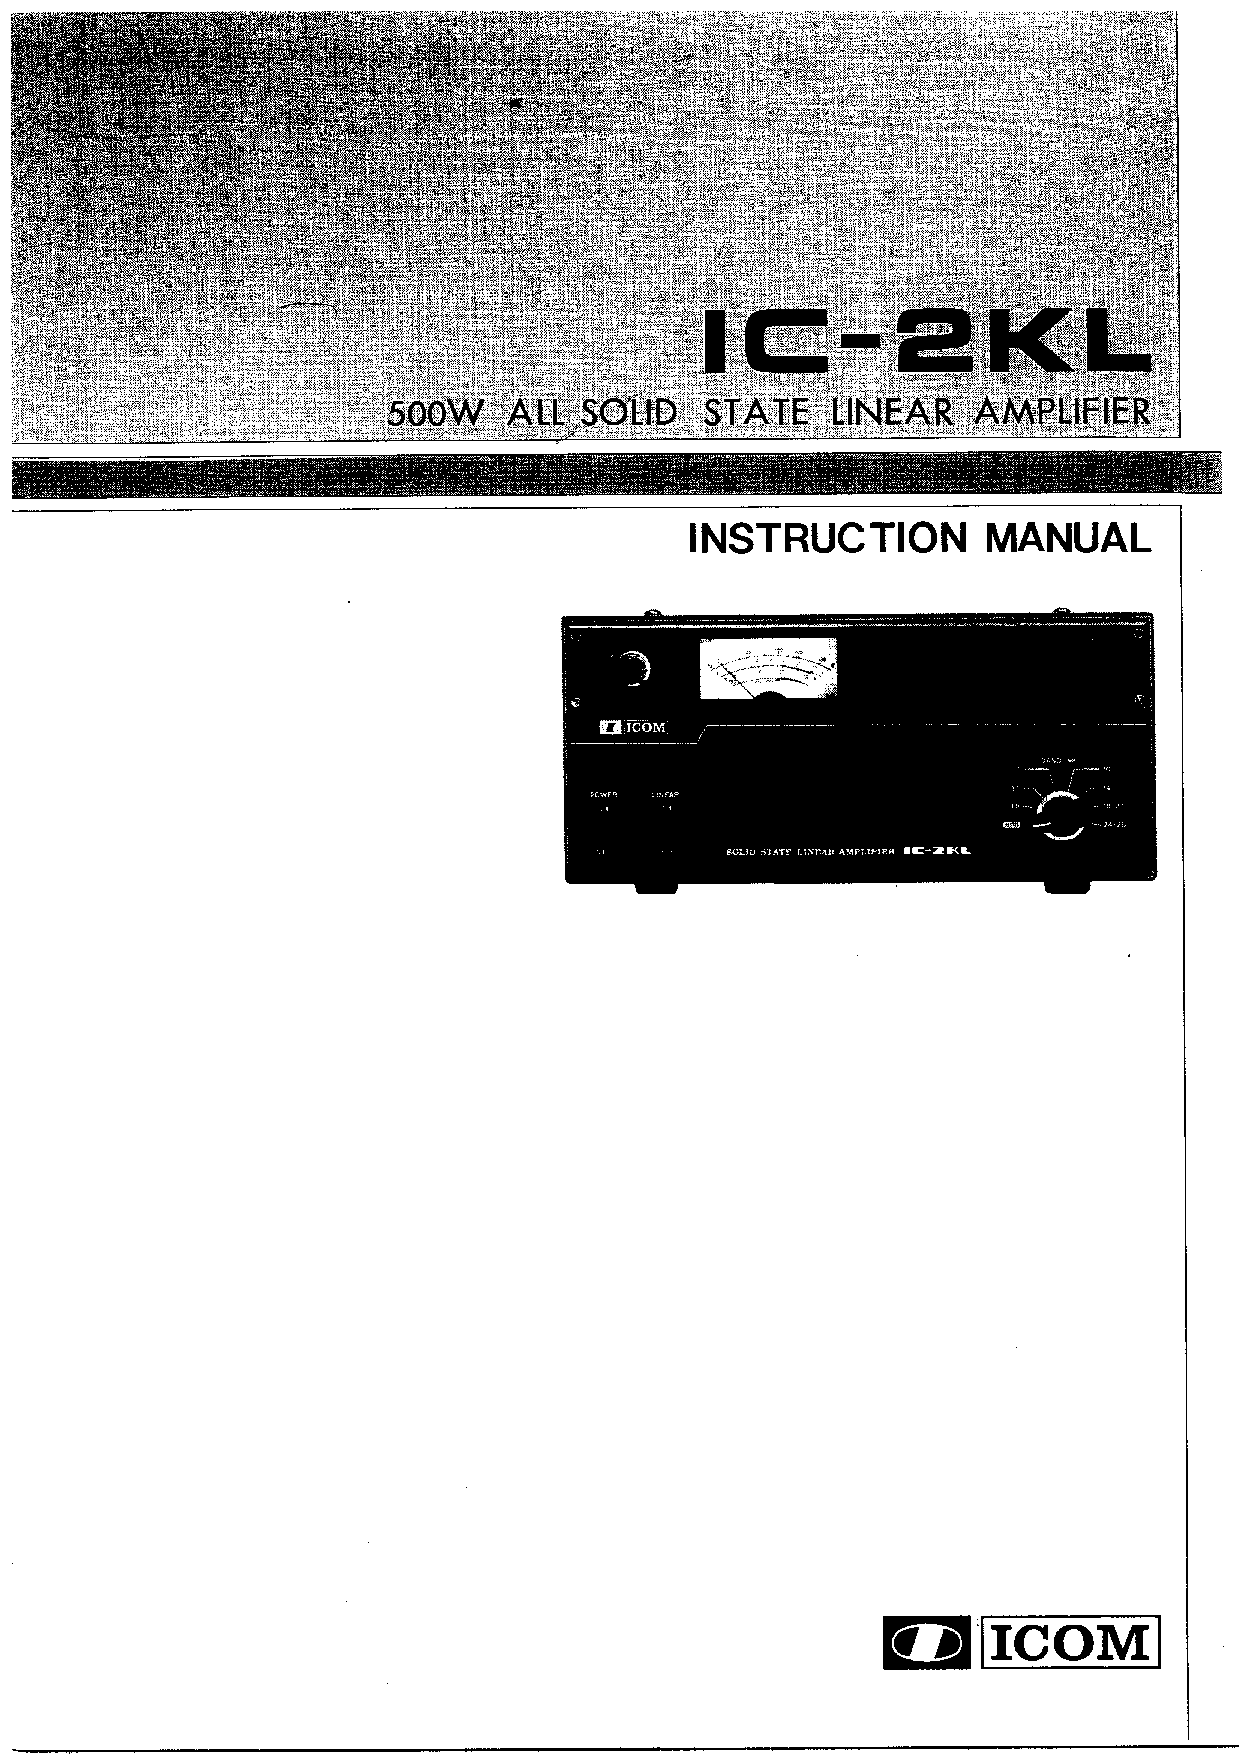 Icom IC-2KL User Manual